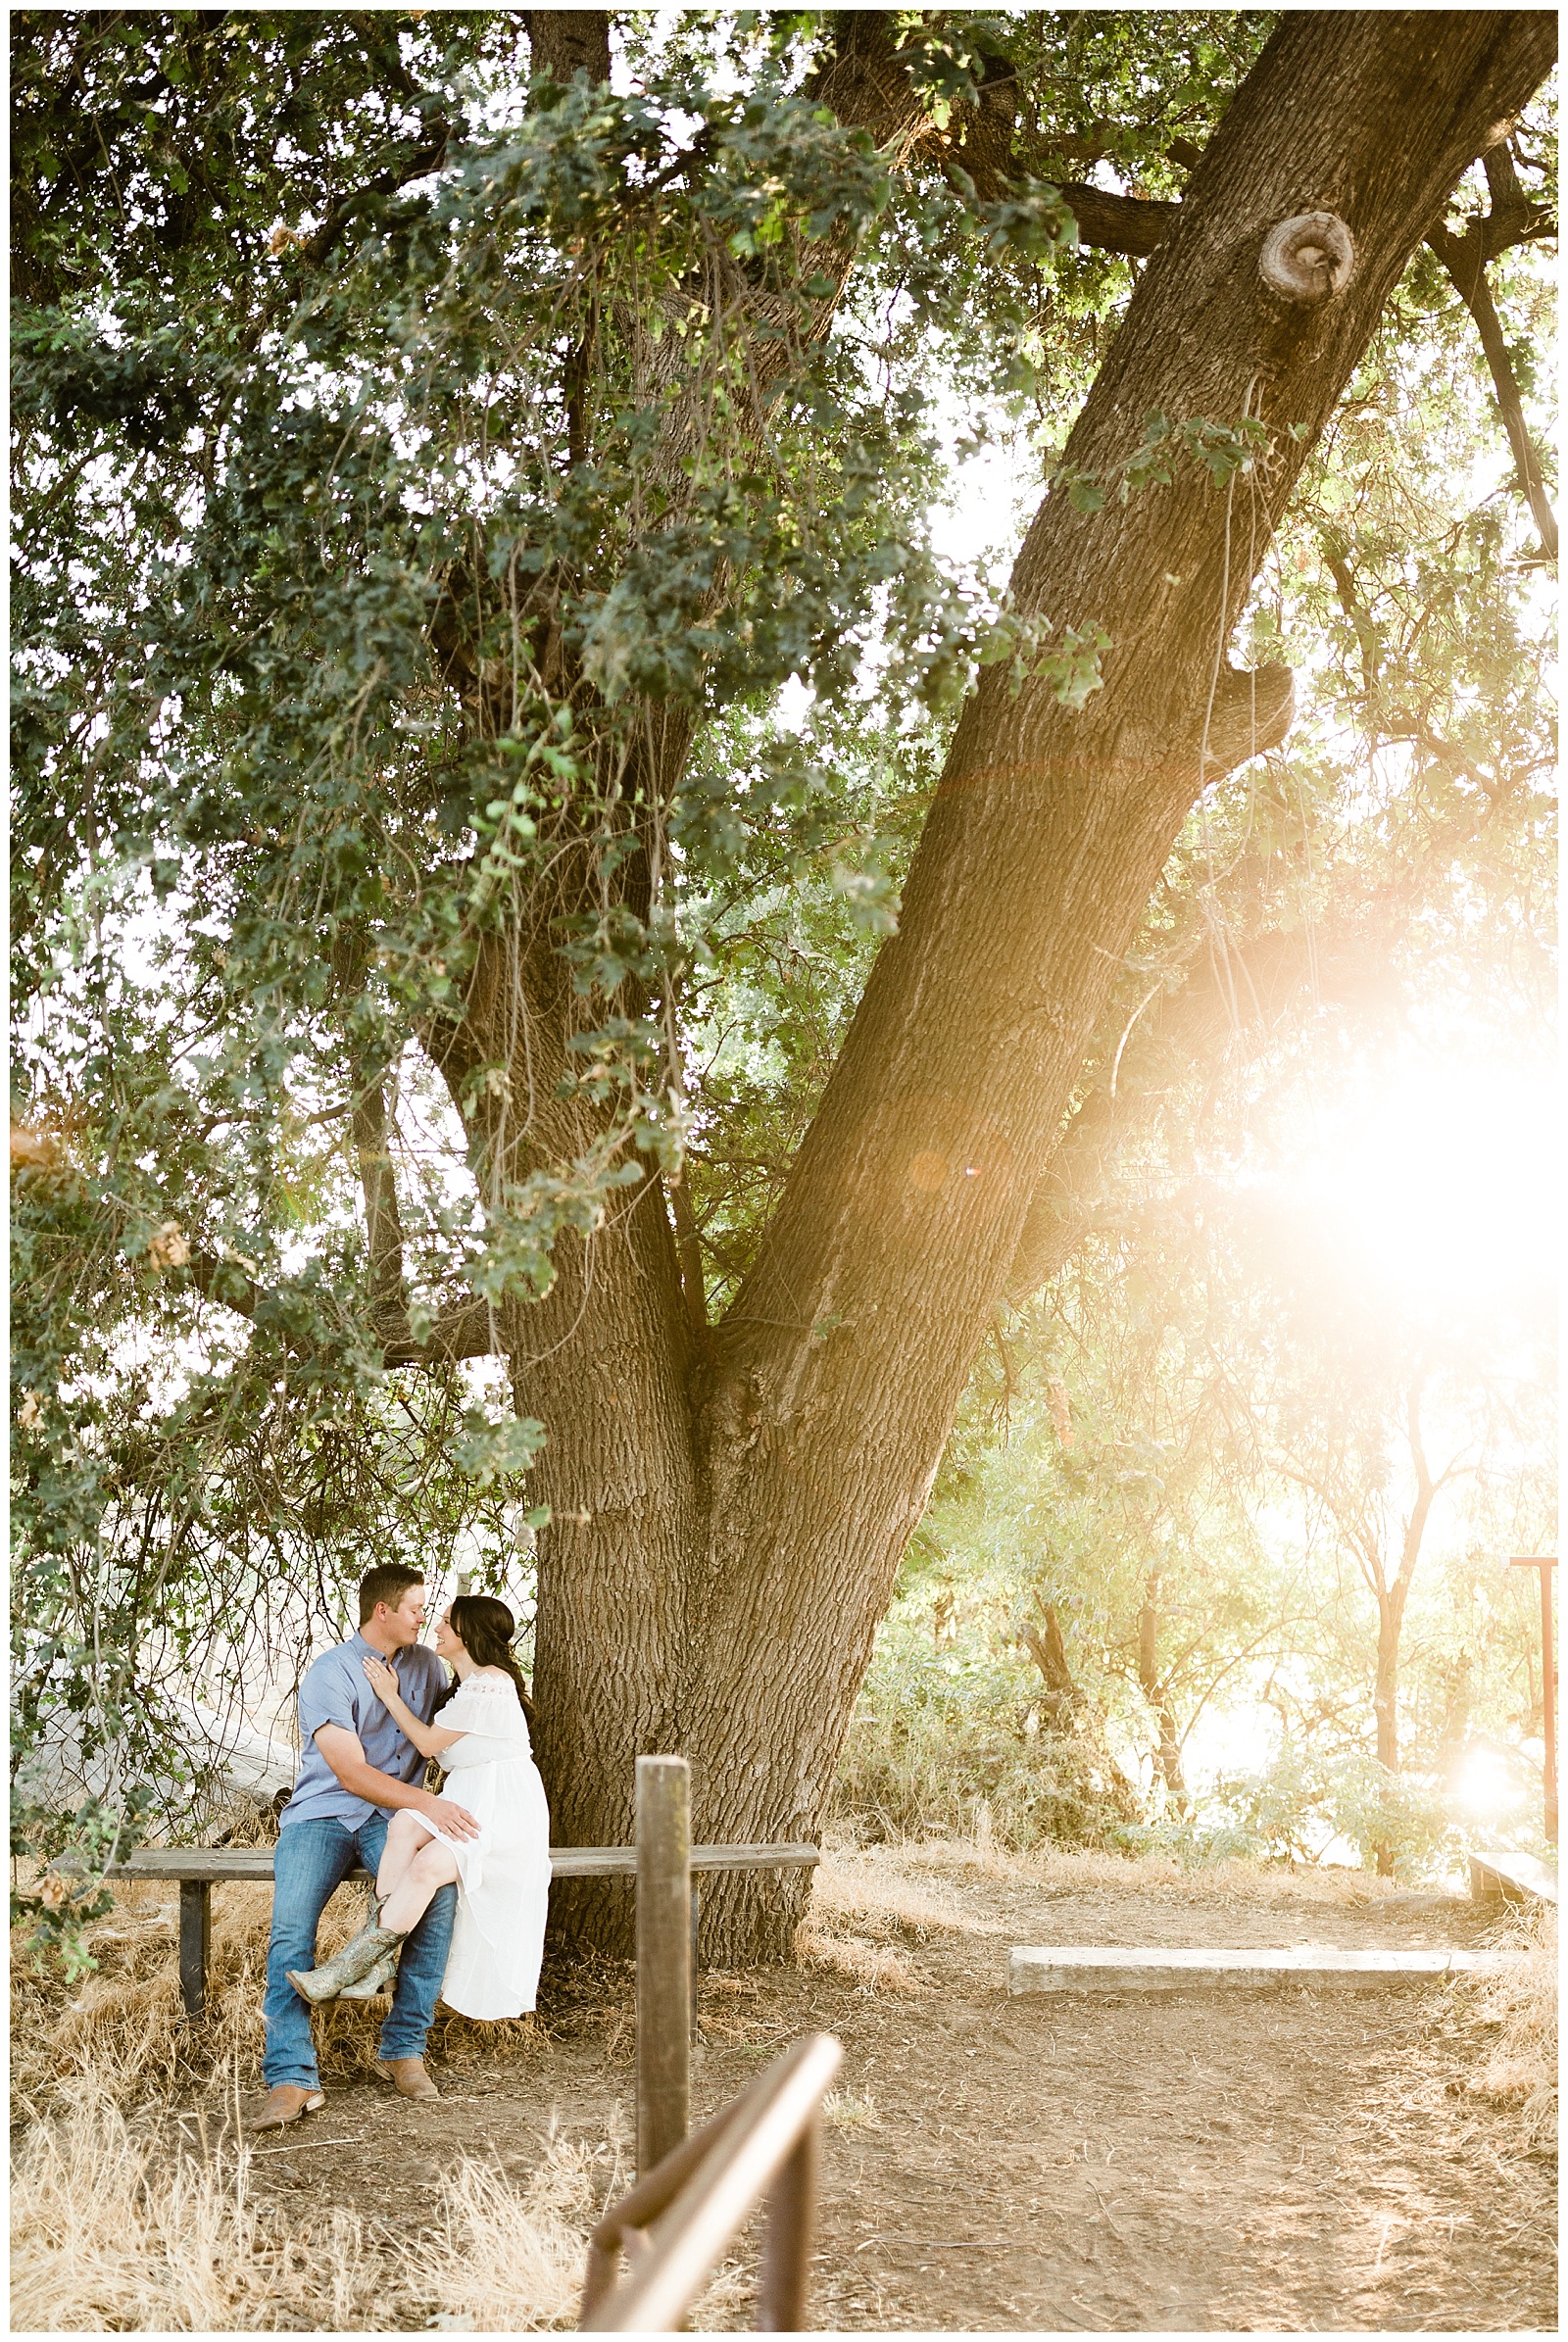 couple cuddling on a bench under an oak tree